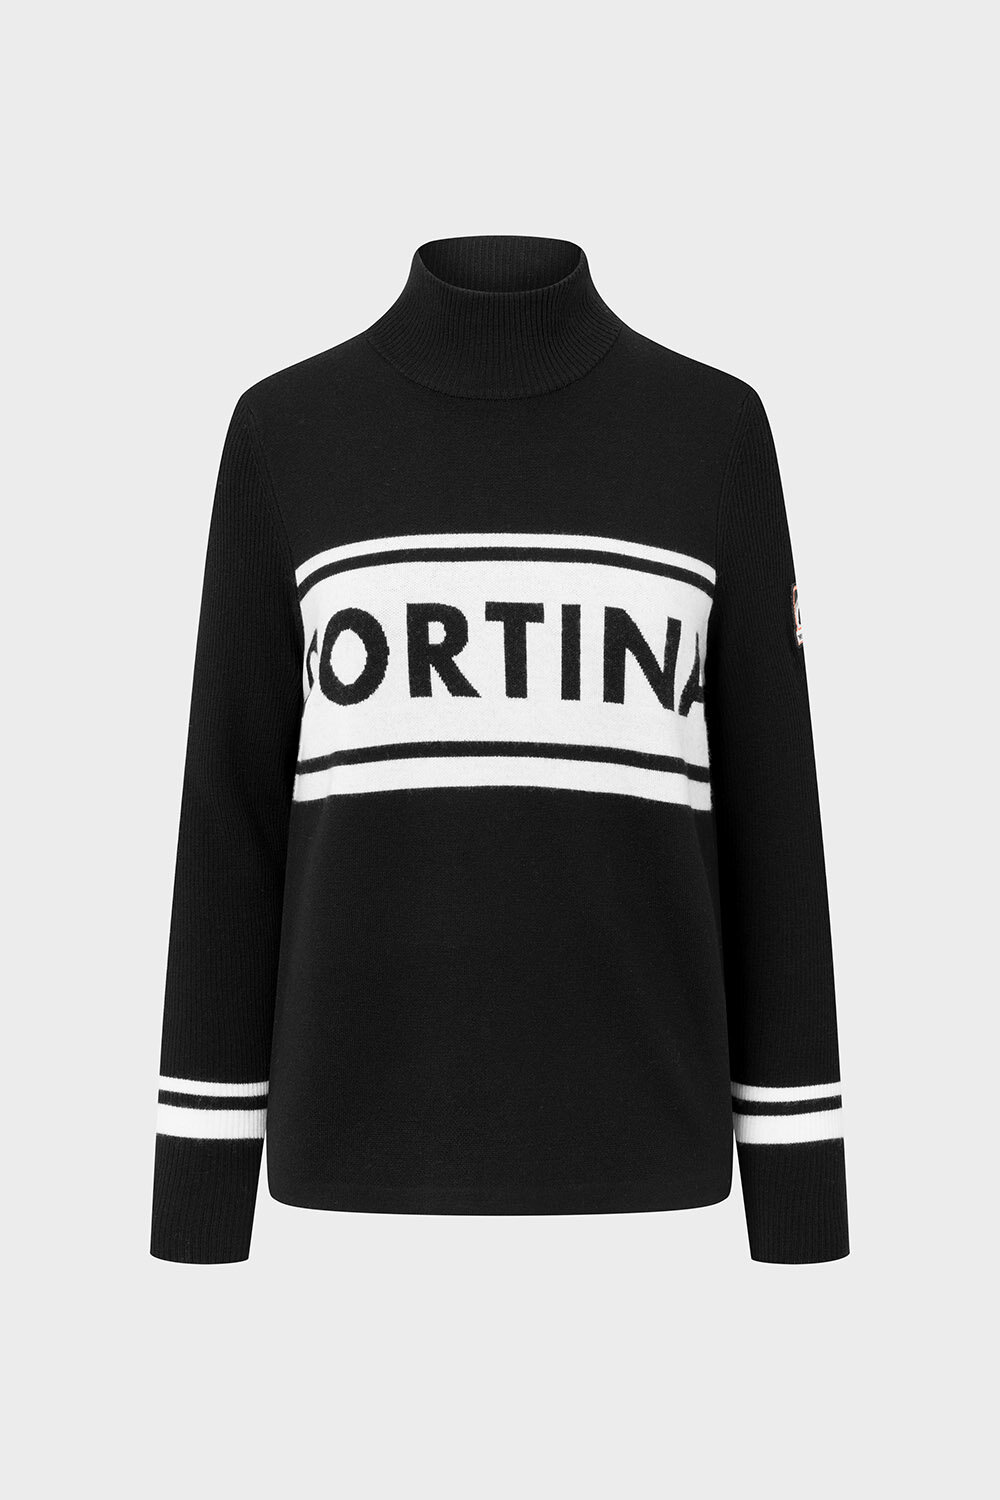 Cortina Sweater